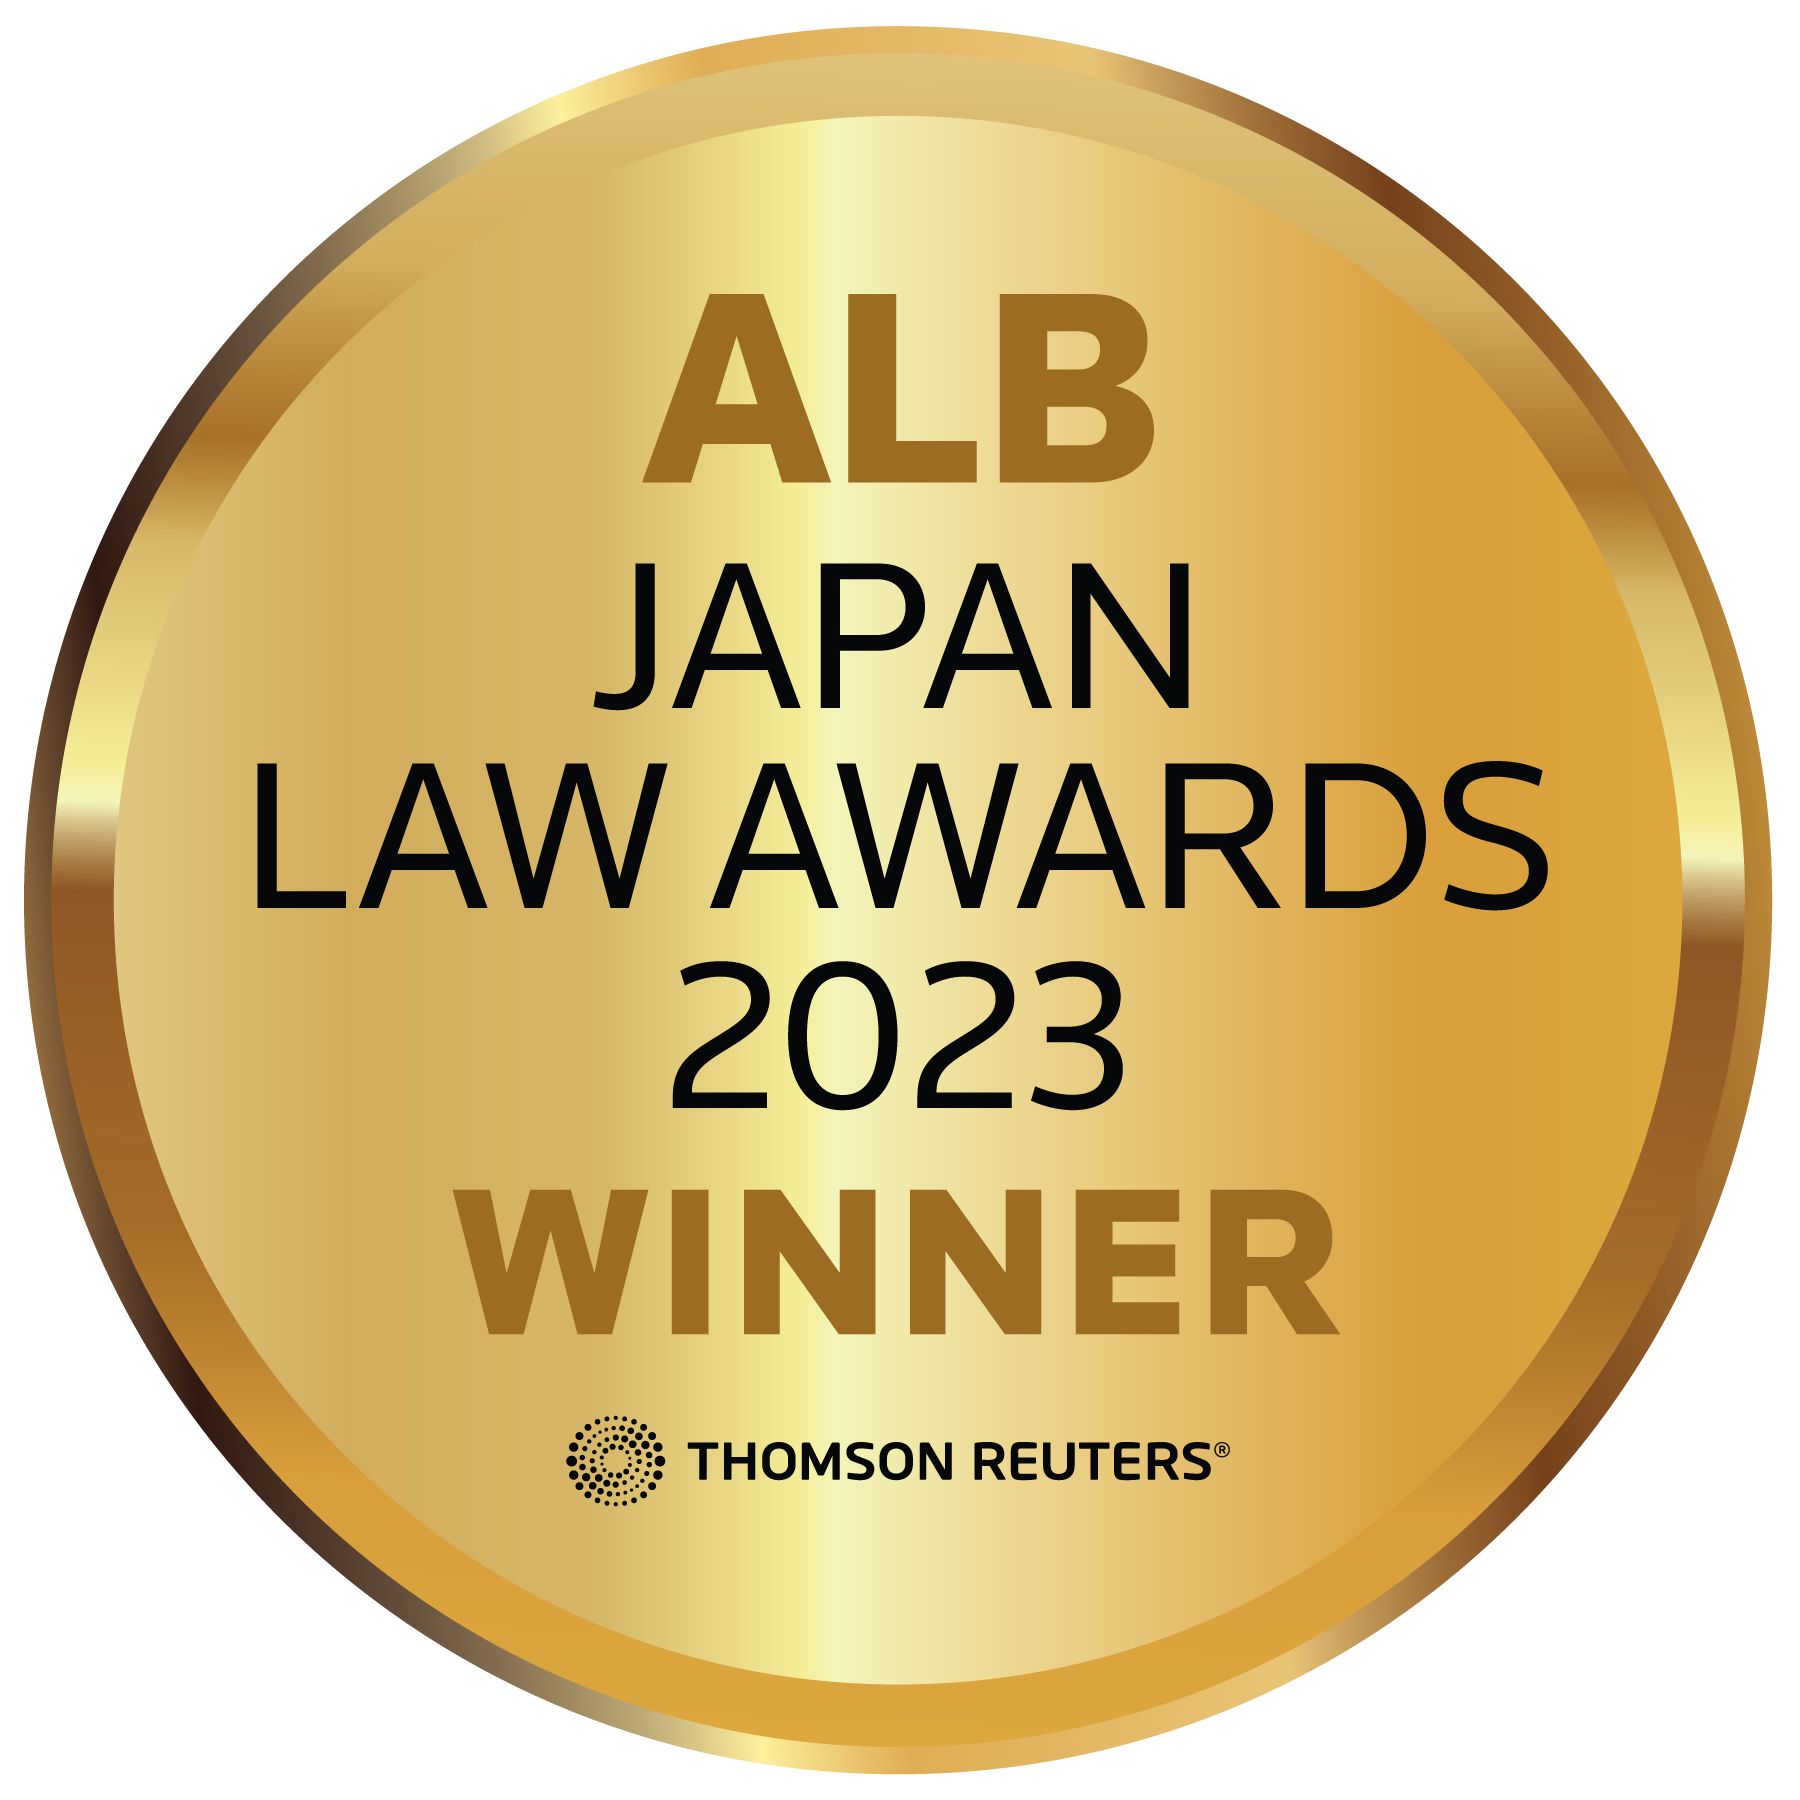 ASIAN LEGAL BUSINESS JAPAN LAW AWARDS 2023 WINNER